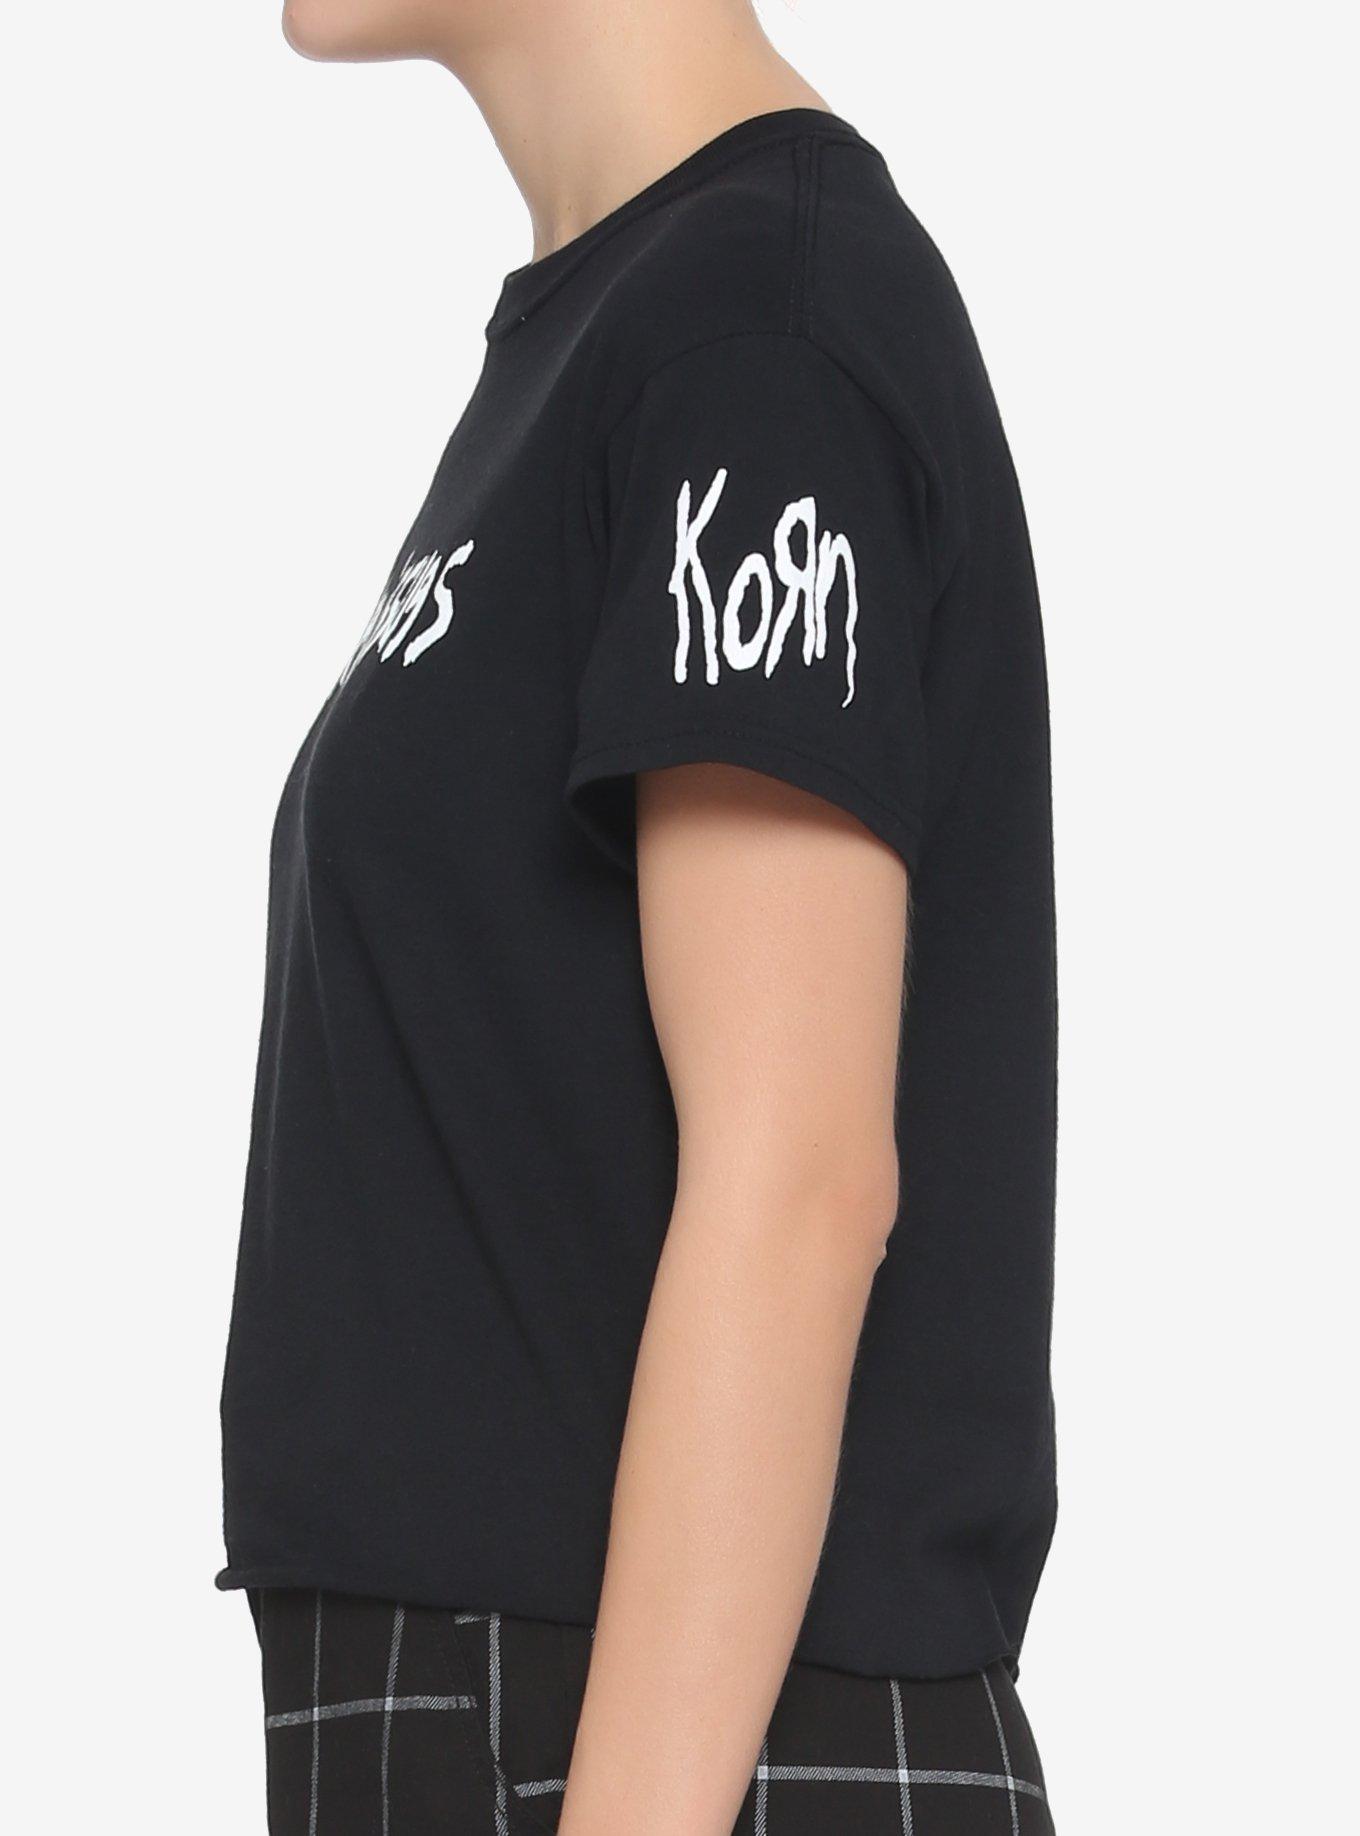 Korn I Have Issues Girls Crop T-Shirt, BLACK, alternate